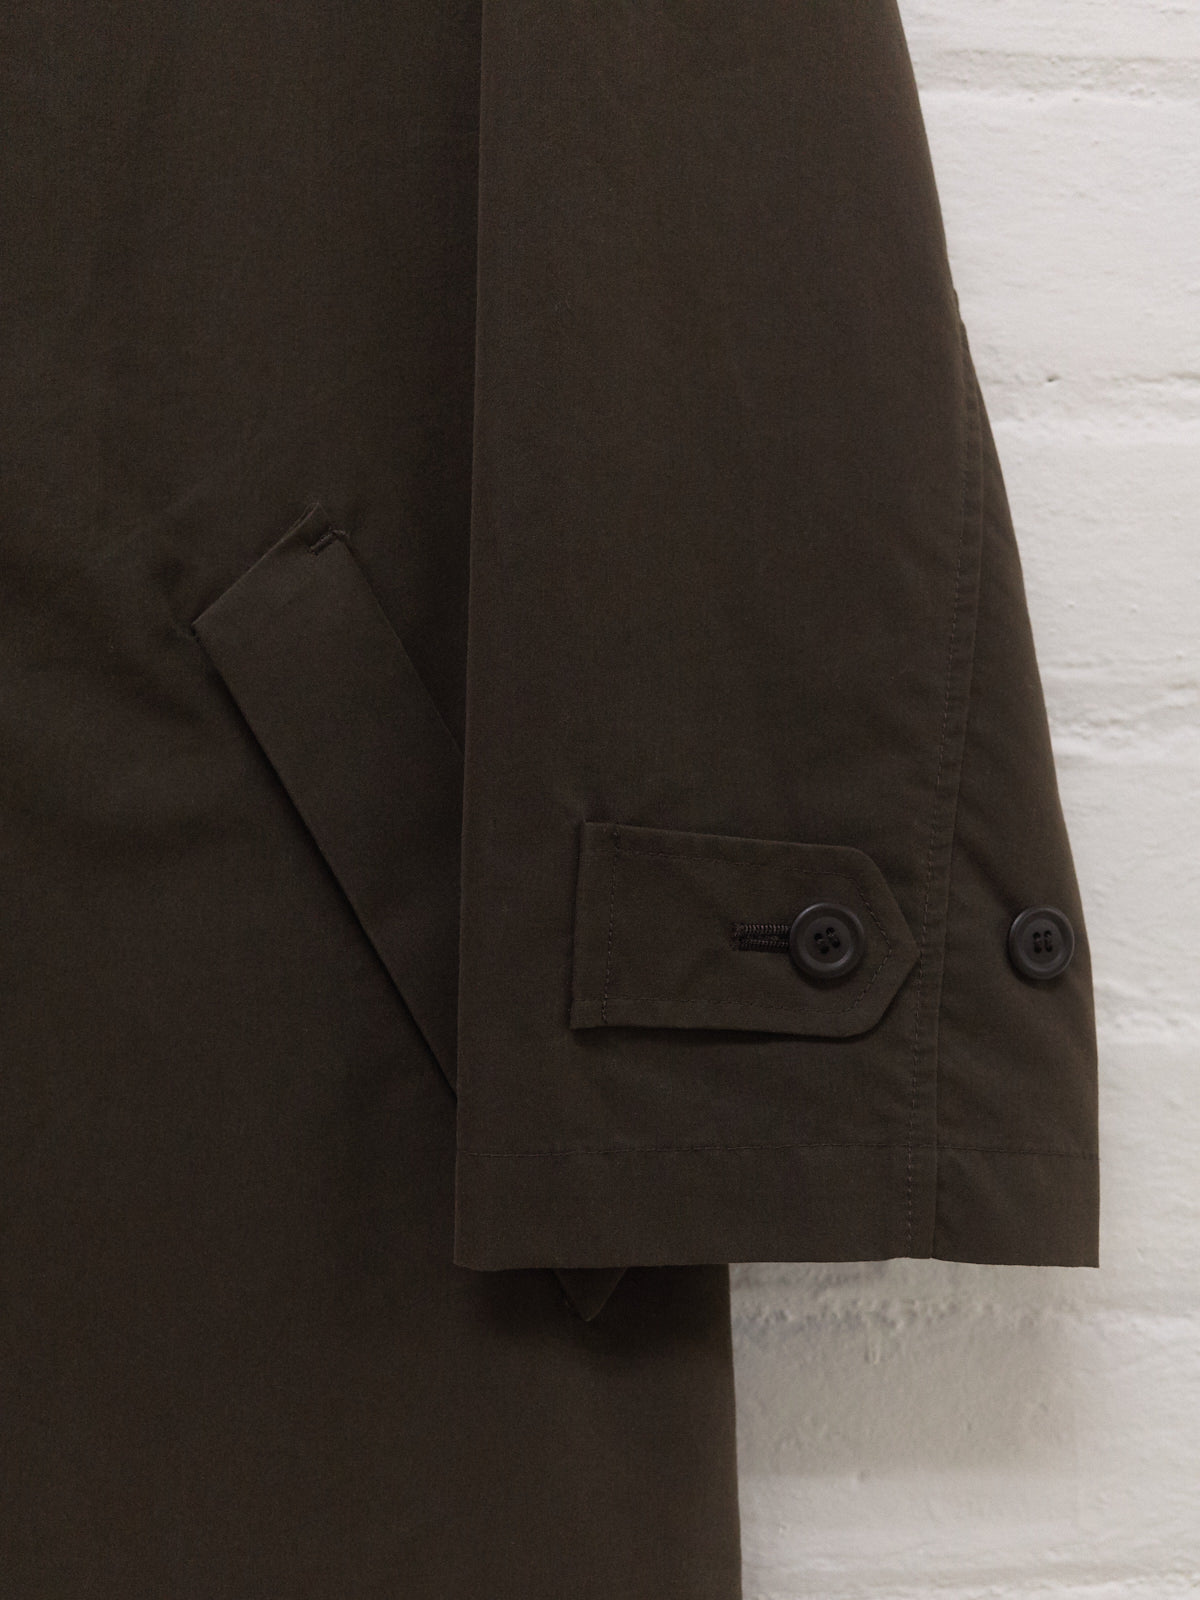 Windcoat Issey Miyake brown removable liner mackintosh coat - size M